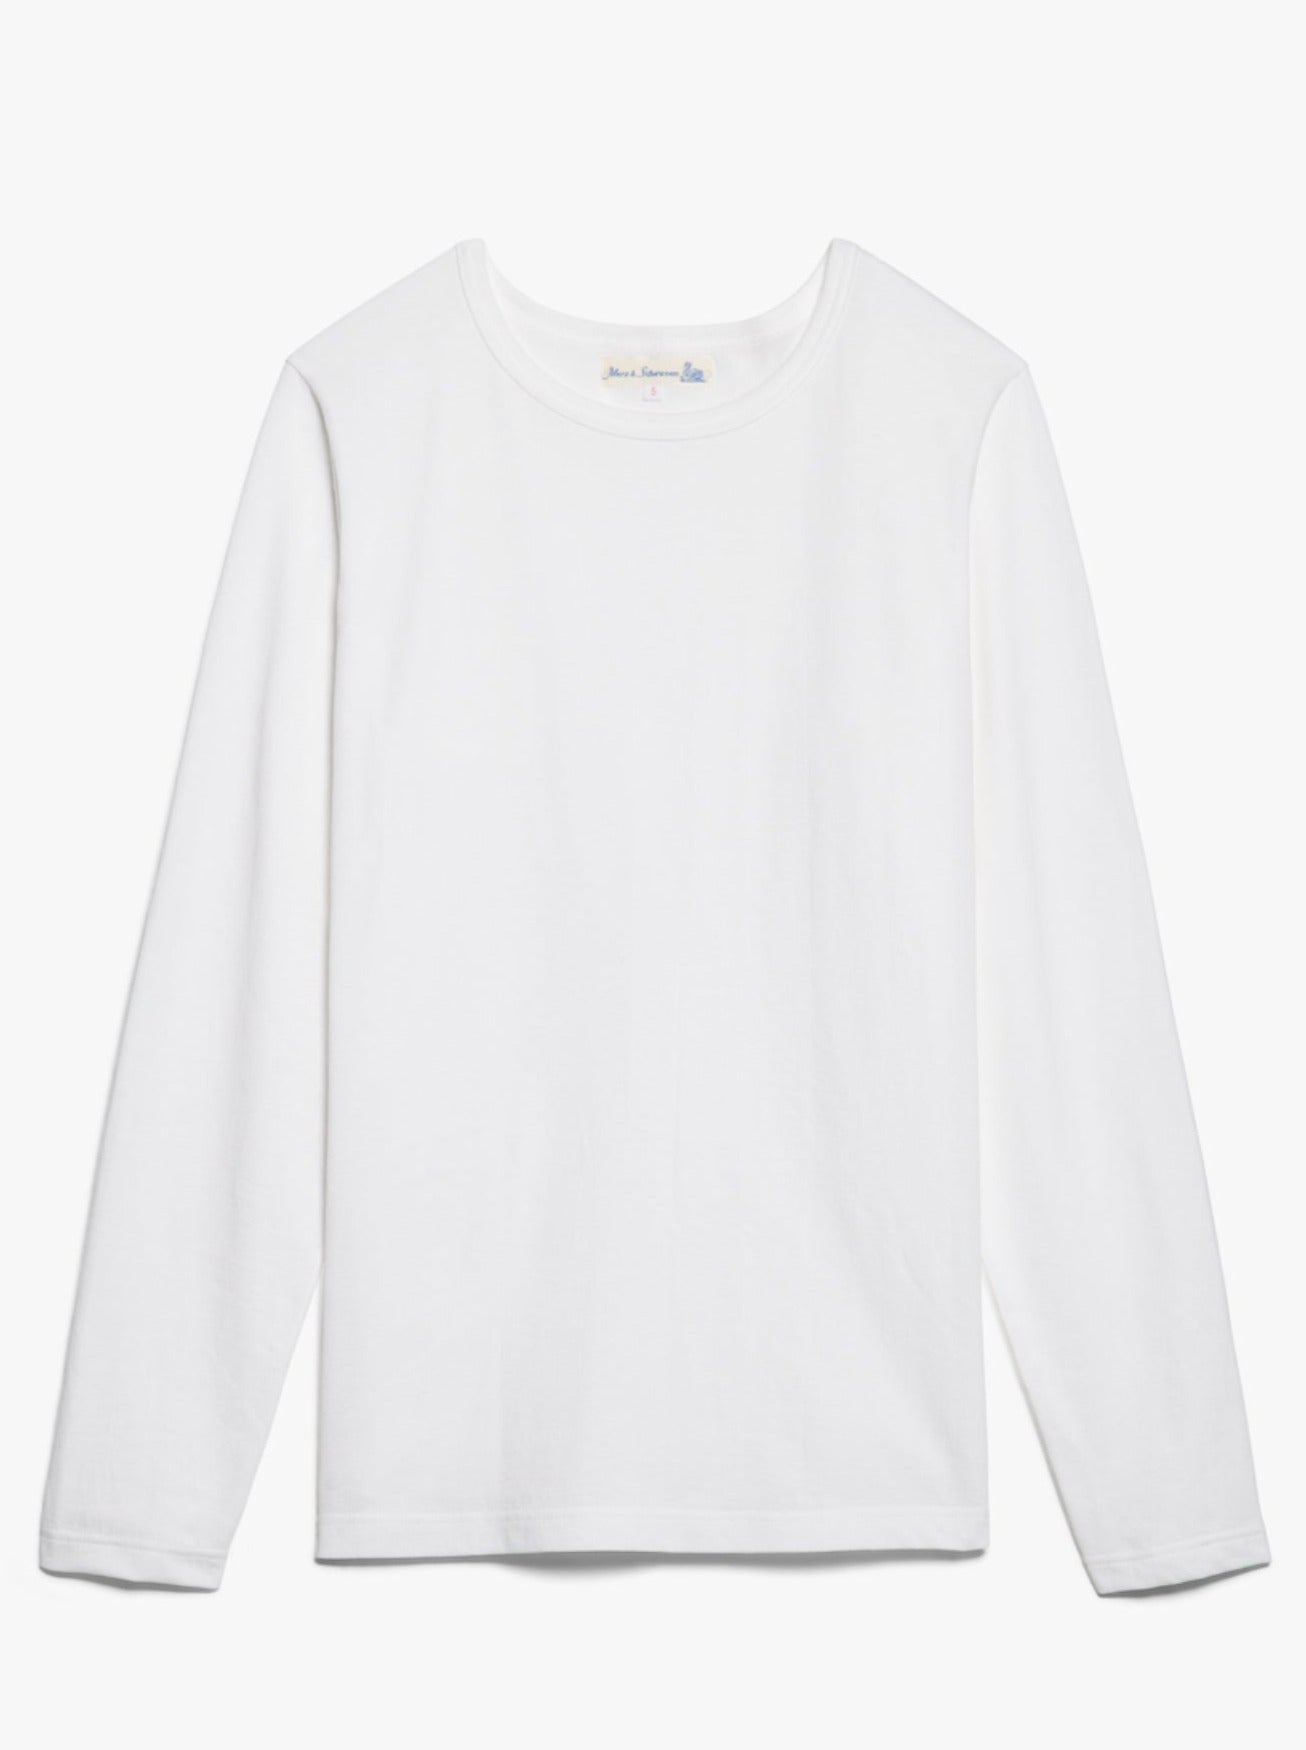 MZB Men's 1950sLS T-shirt Long sleeve 5.5oz White